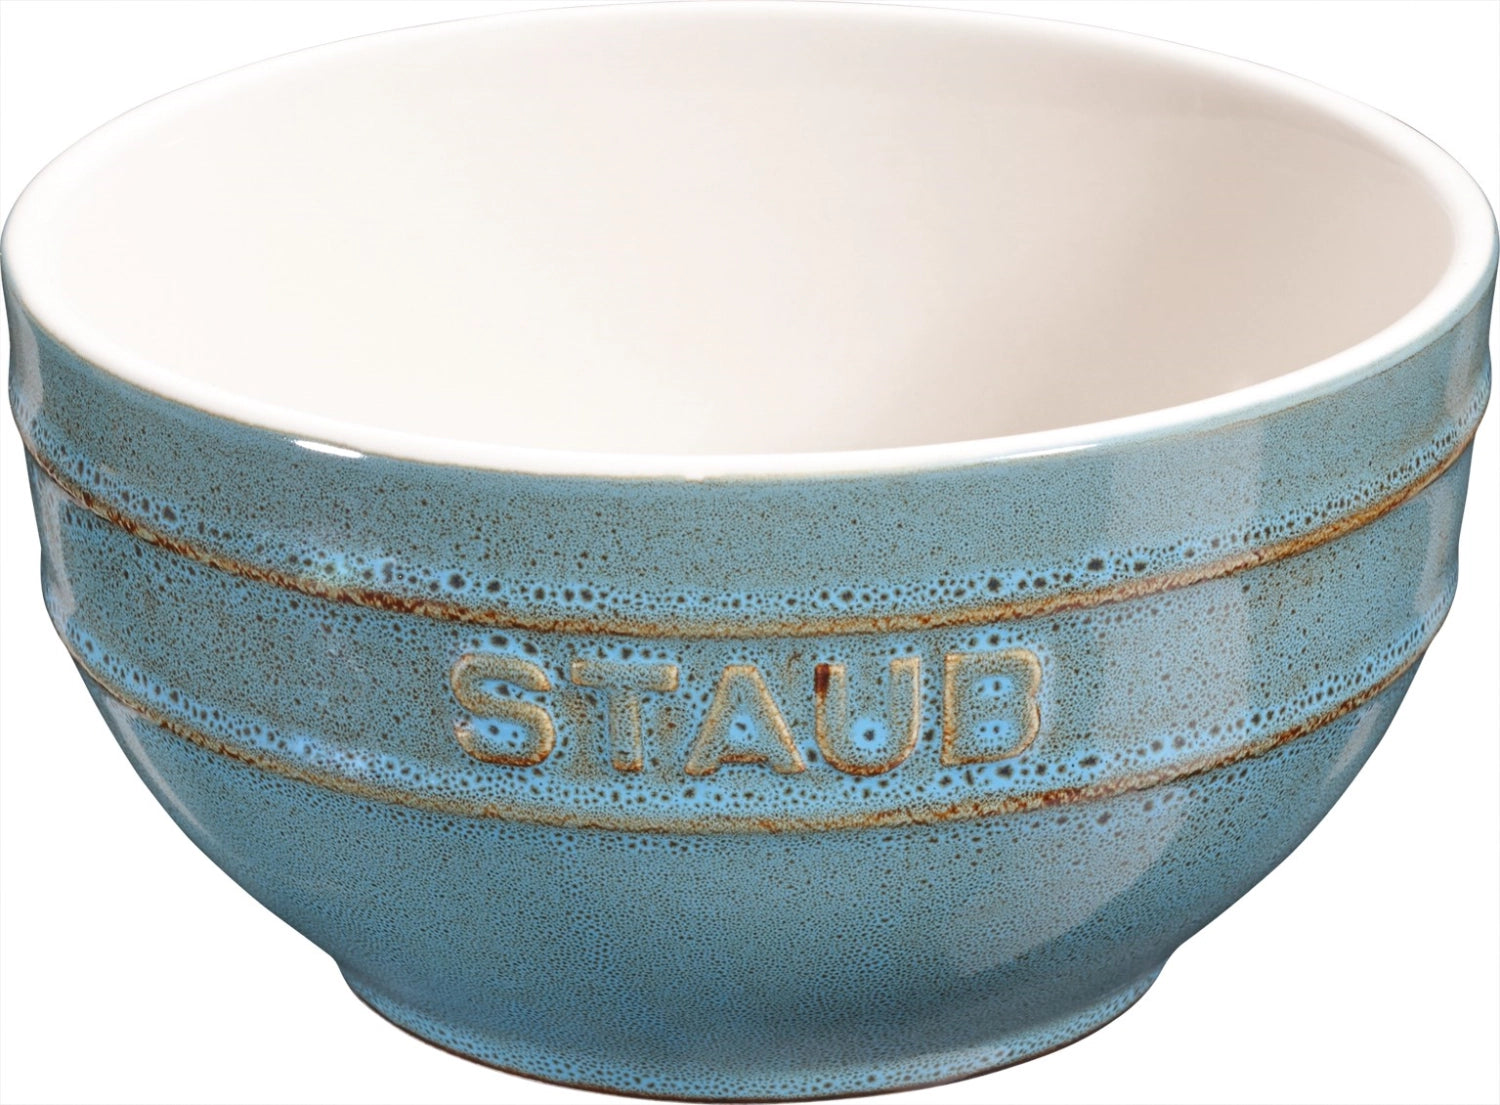 Keramik Schüssel klein, antik-türkis, 12 cm - KAQTU Design